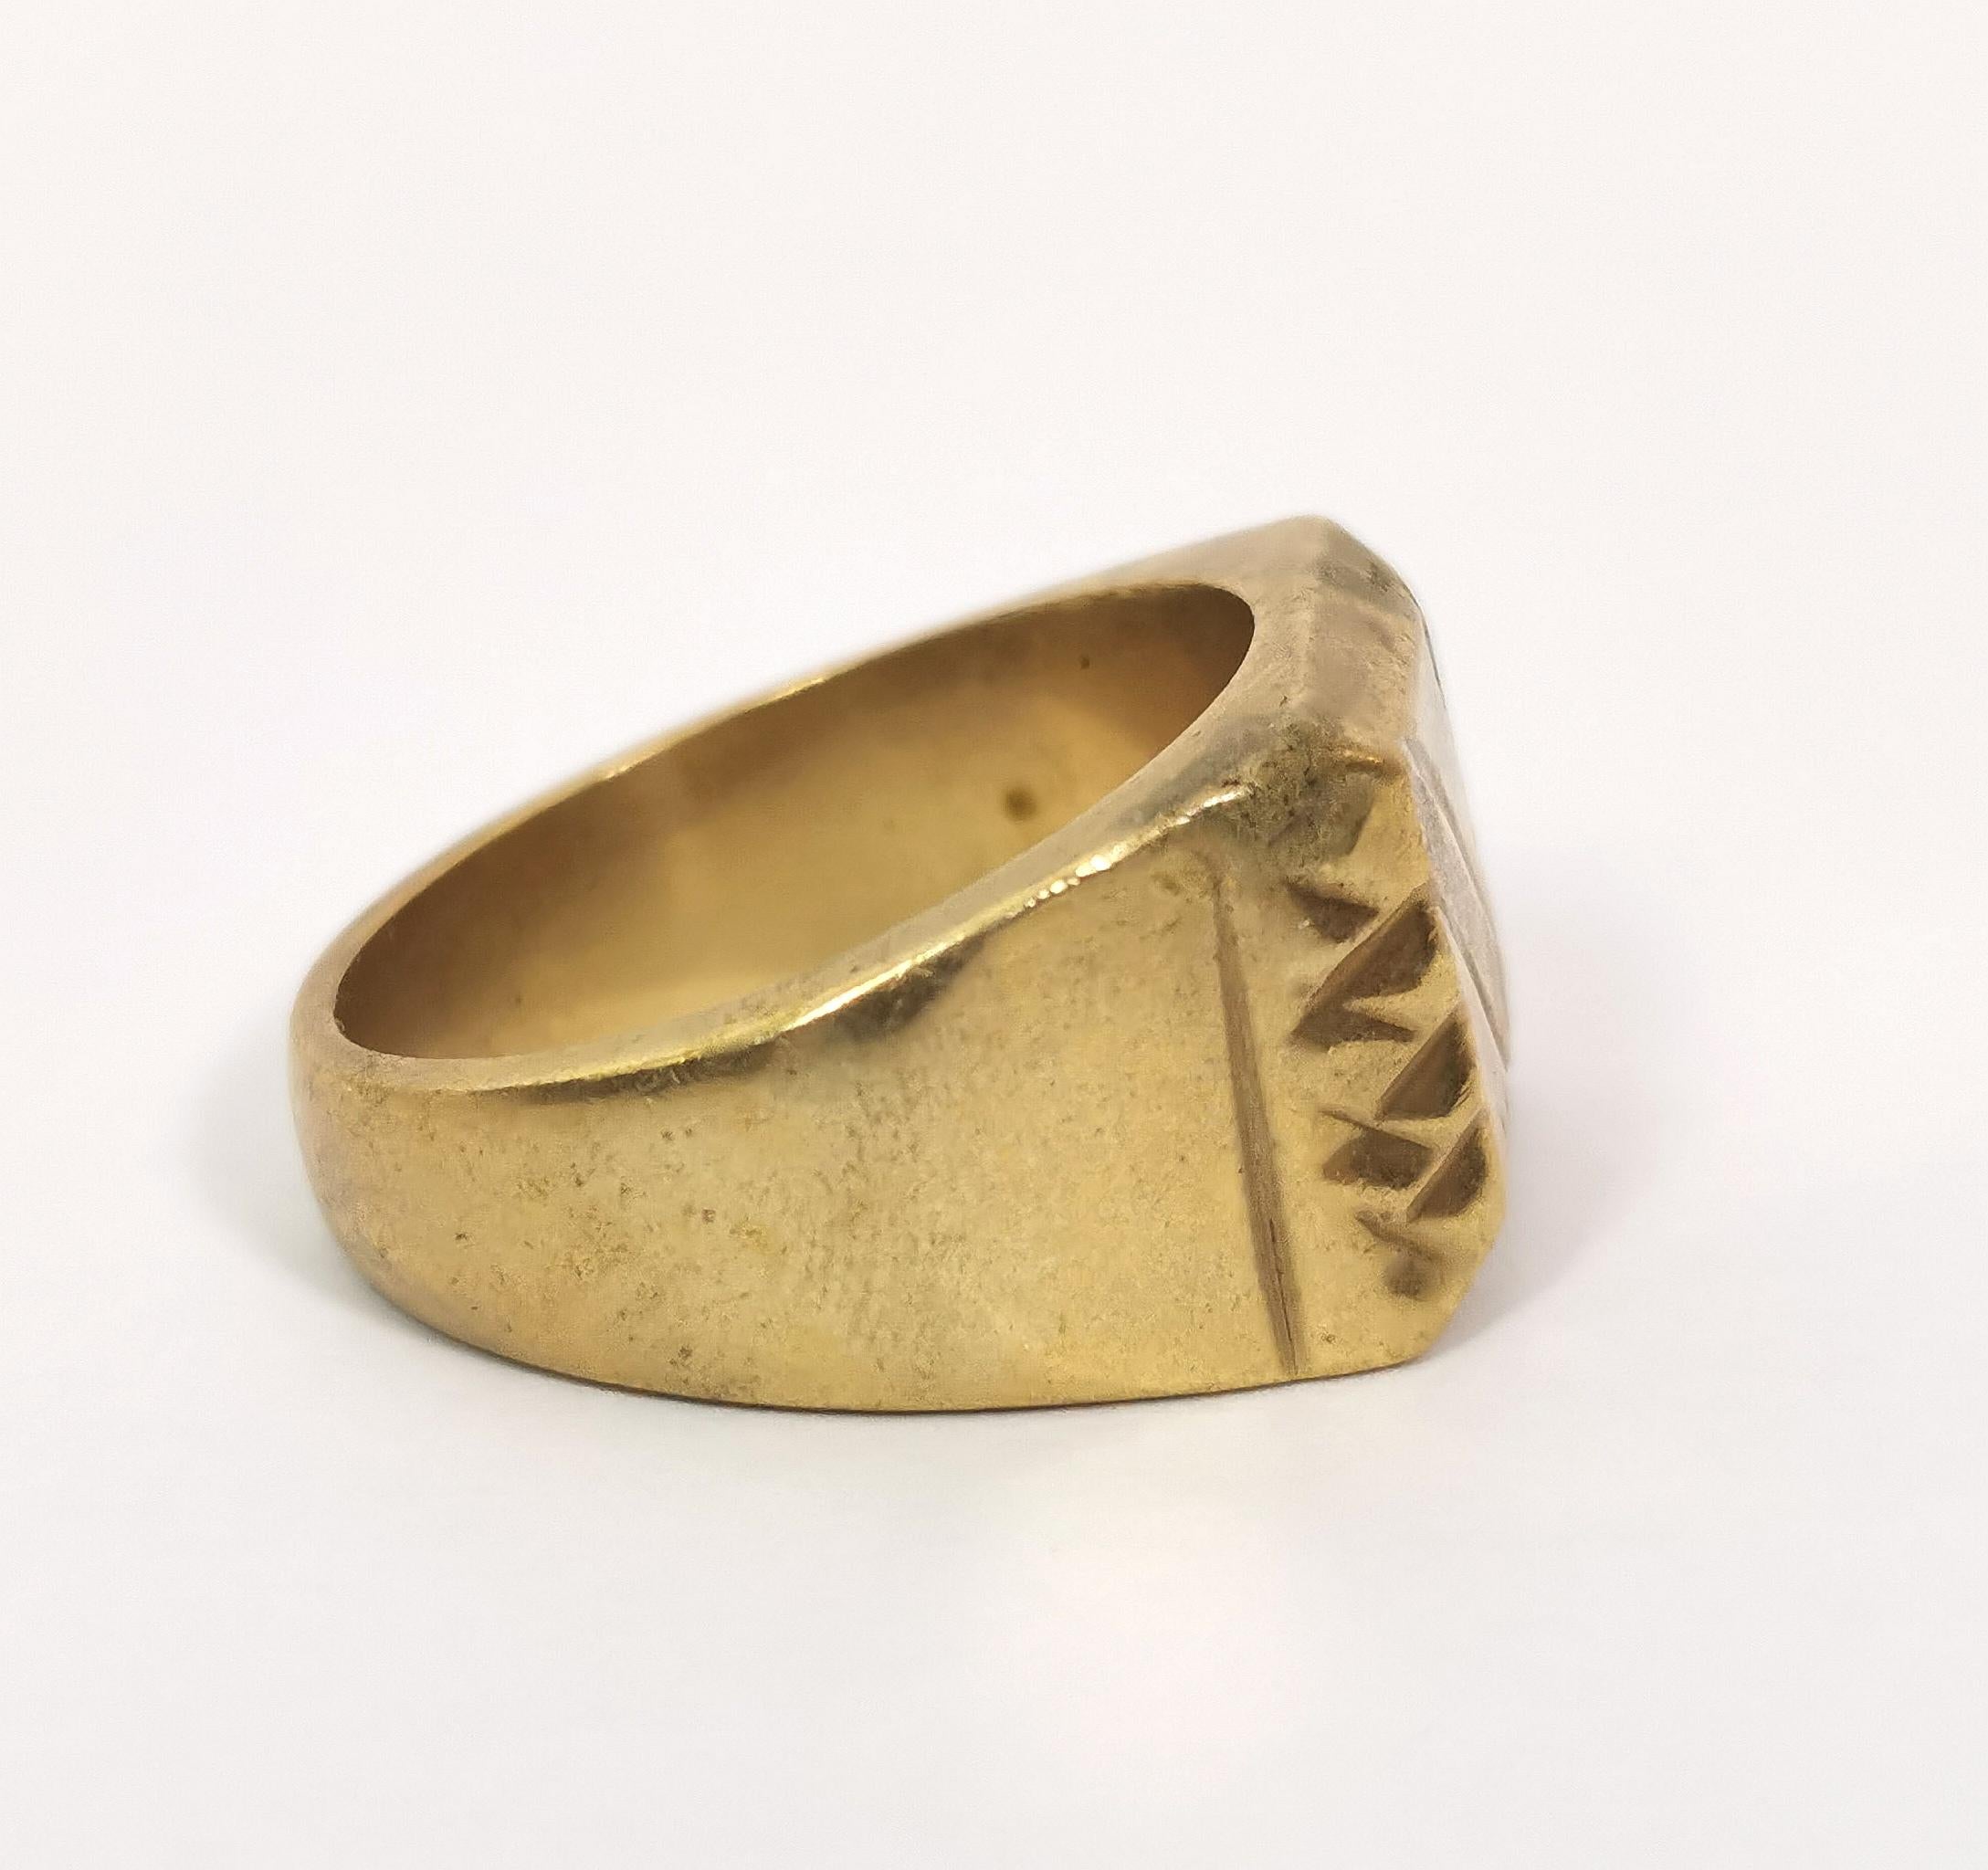 Vintage 18k gold plated signet ring, c1970s 3